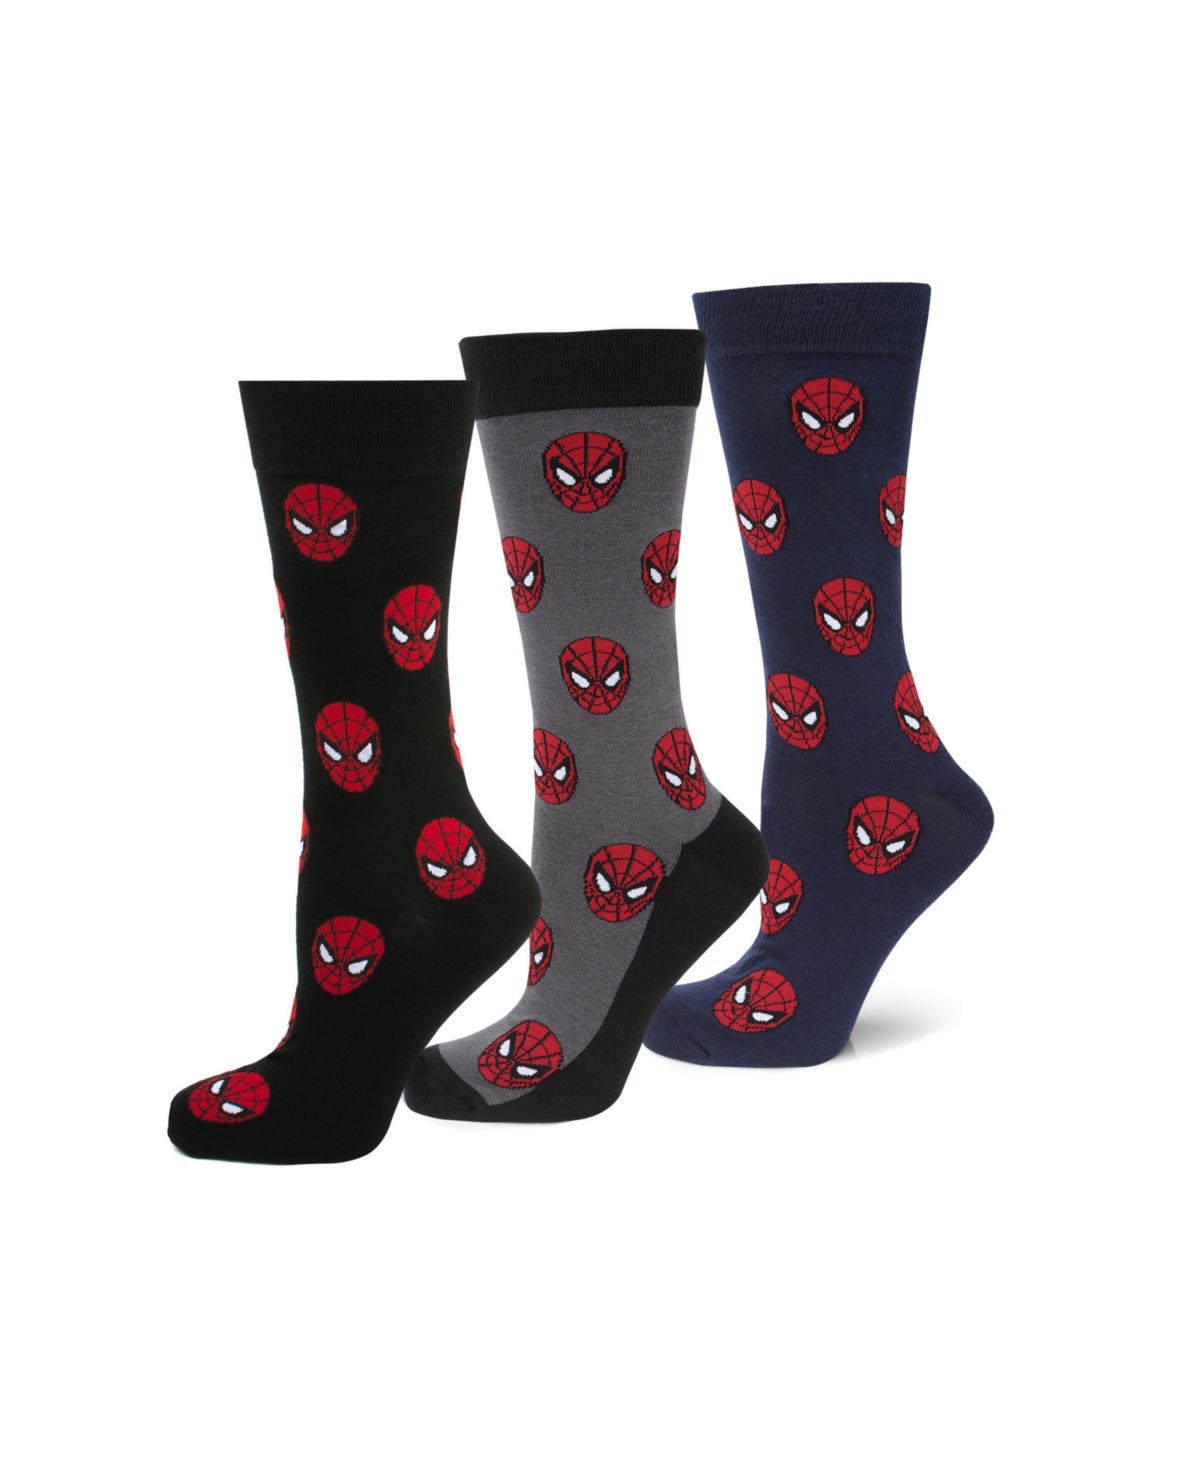 Men's Spider-Man Sock Set, Pack of 3 - Multi